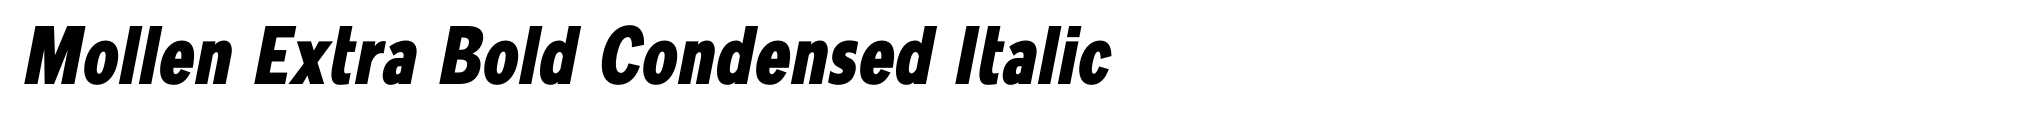 Mollen Extra Bold Condensed Italic image